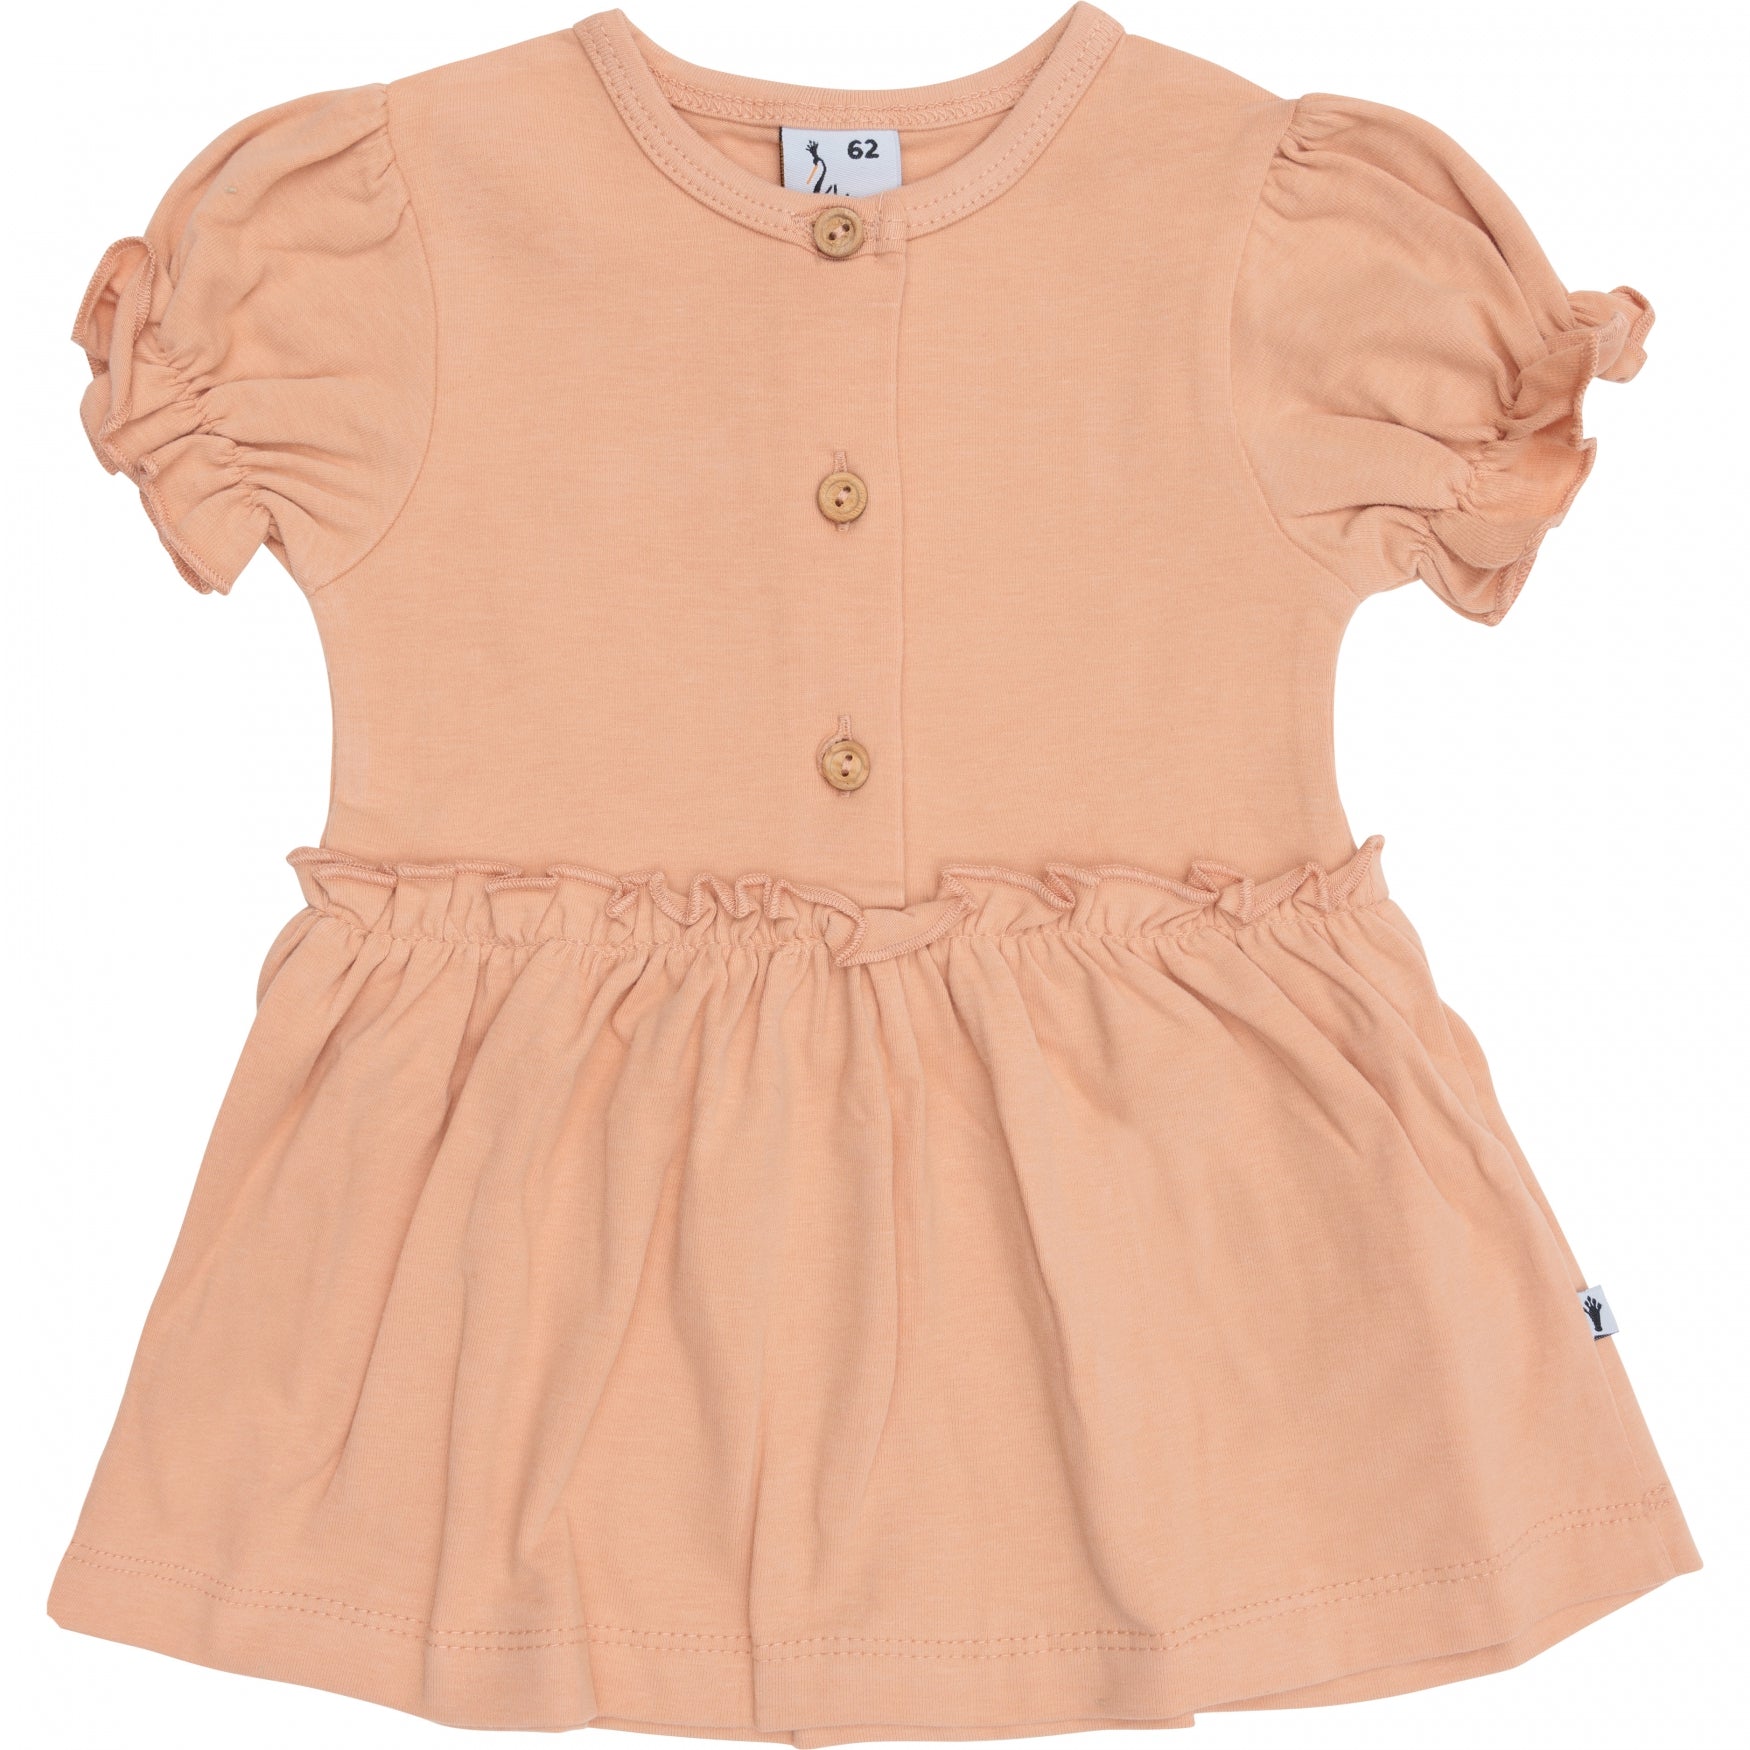 Meisjes Dress Ruffle Shortsleeve van Klein Baby in de kleur Dusty Coral in maat 74.